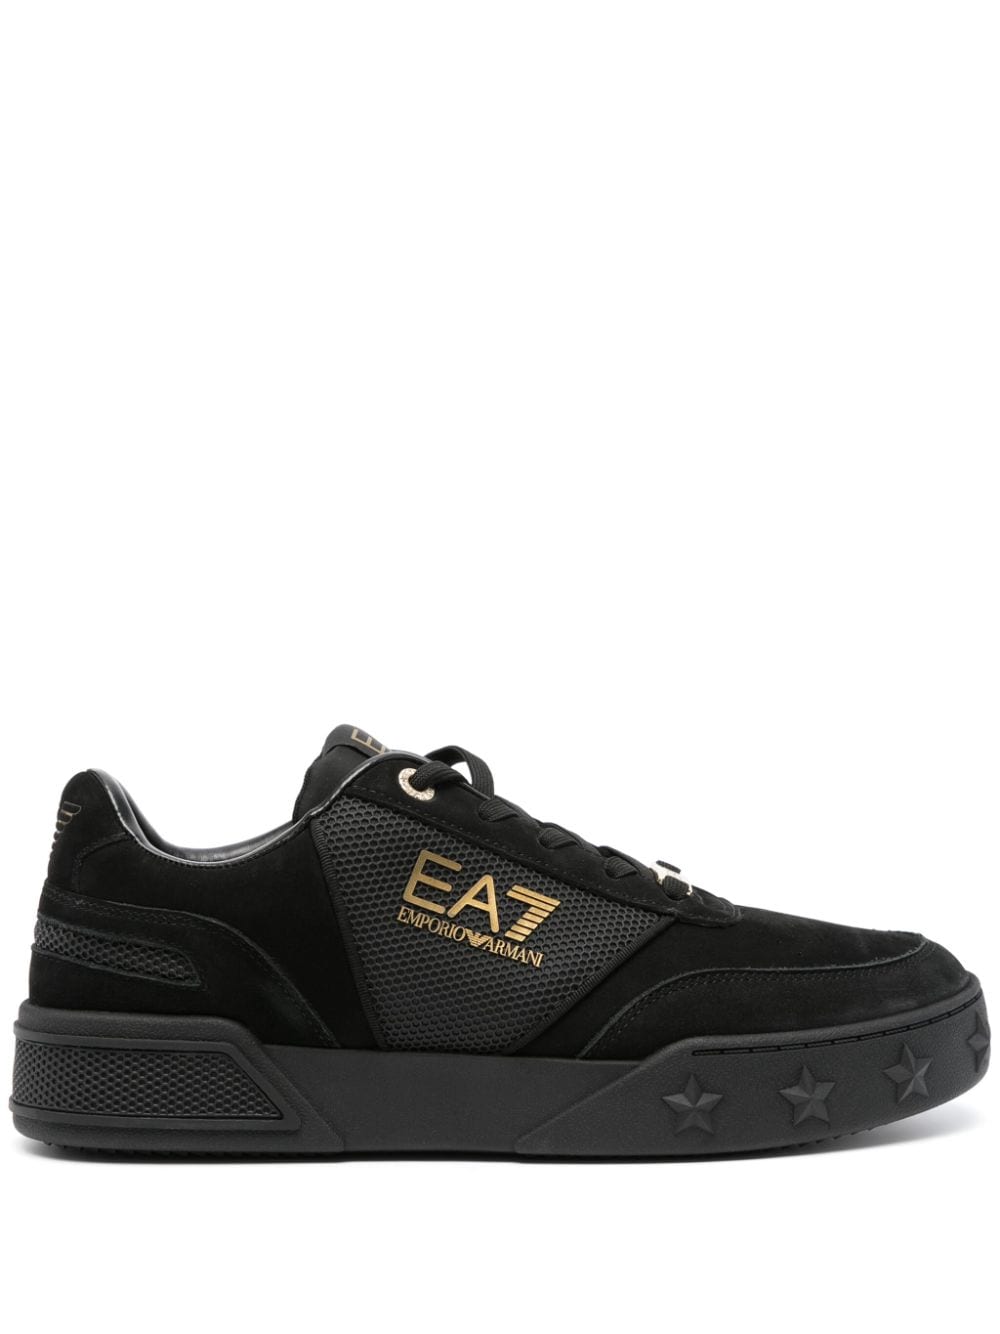 Ea7 Emporio Armani logo-print lace-up sneakers - Black von Ea7 Emporio Armani